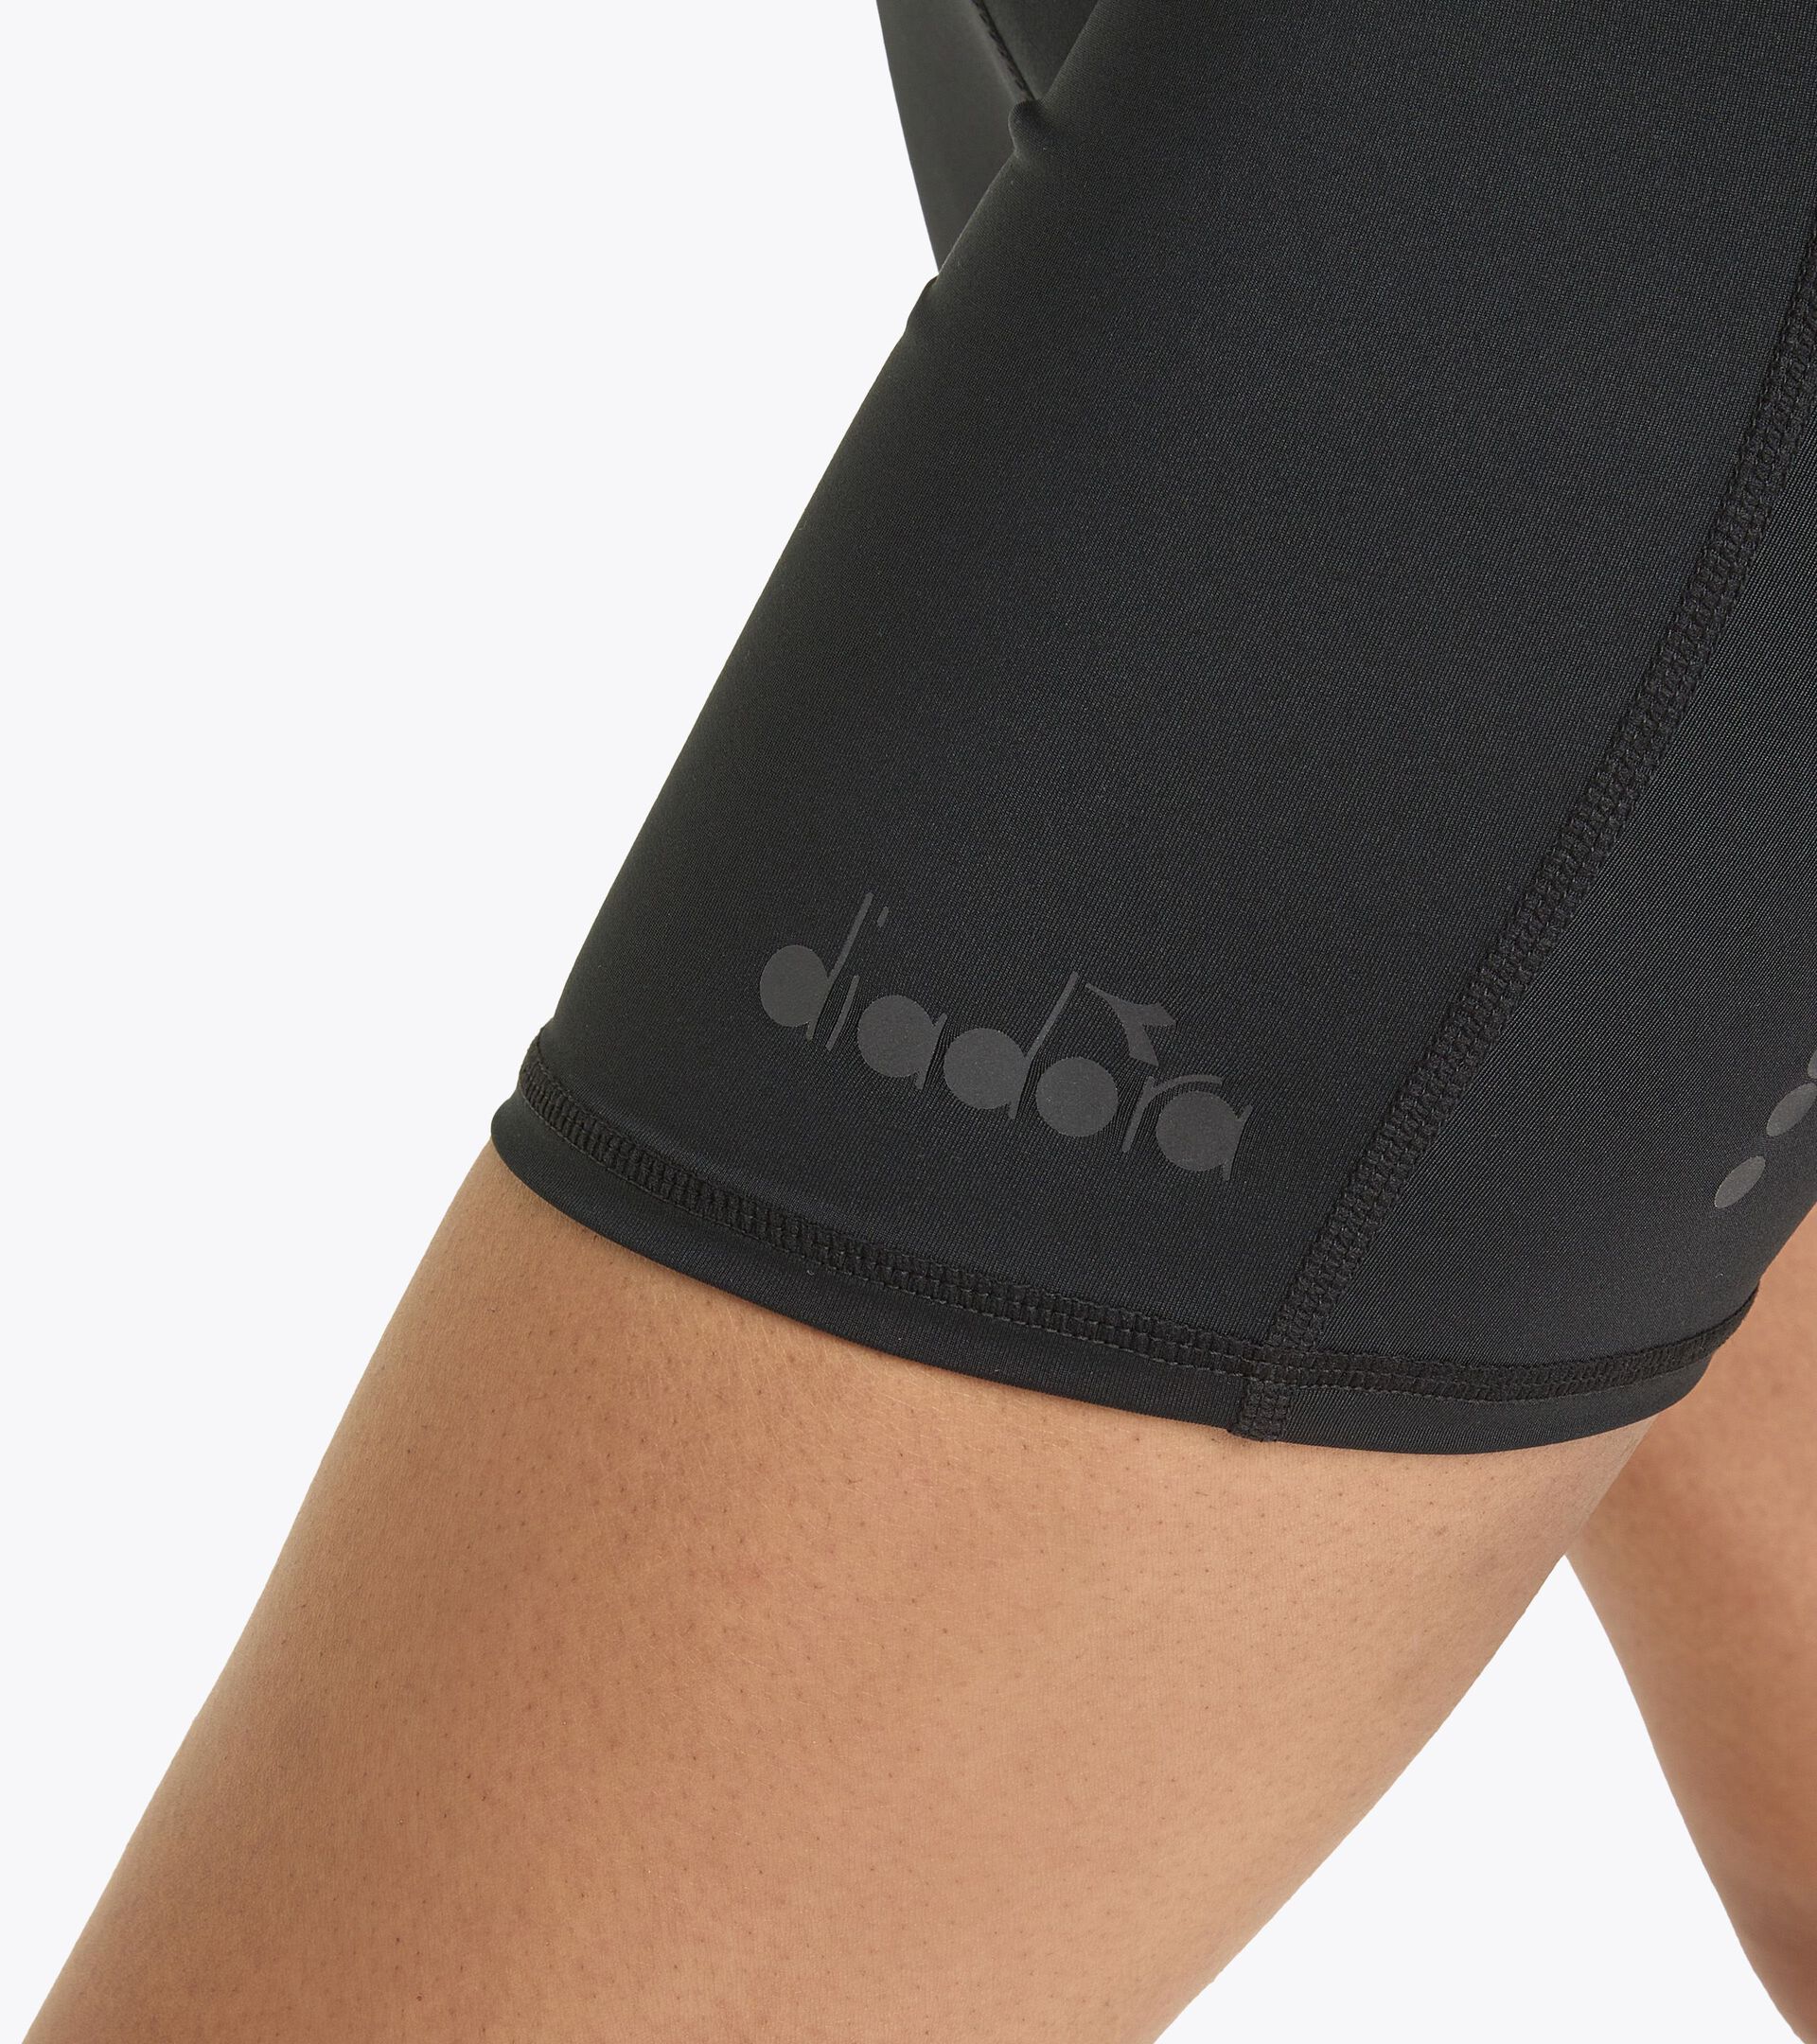 Running shorts - Women L. SHORT TIGHTS BLACK - Diadora